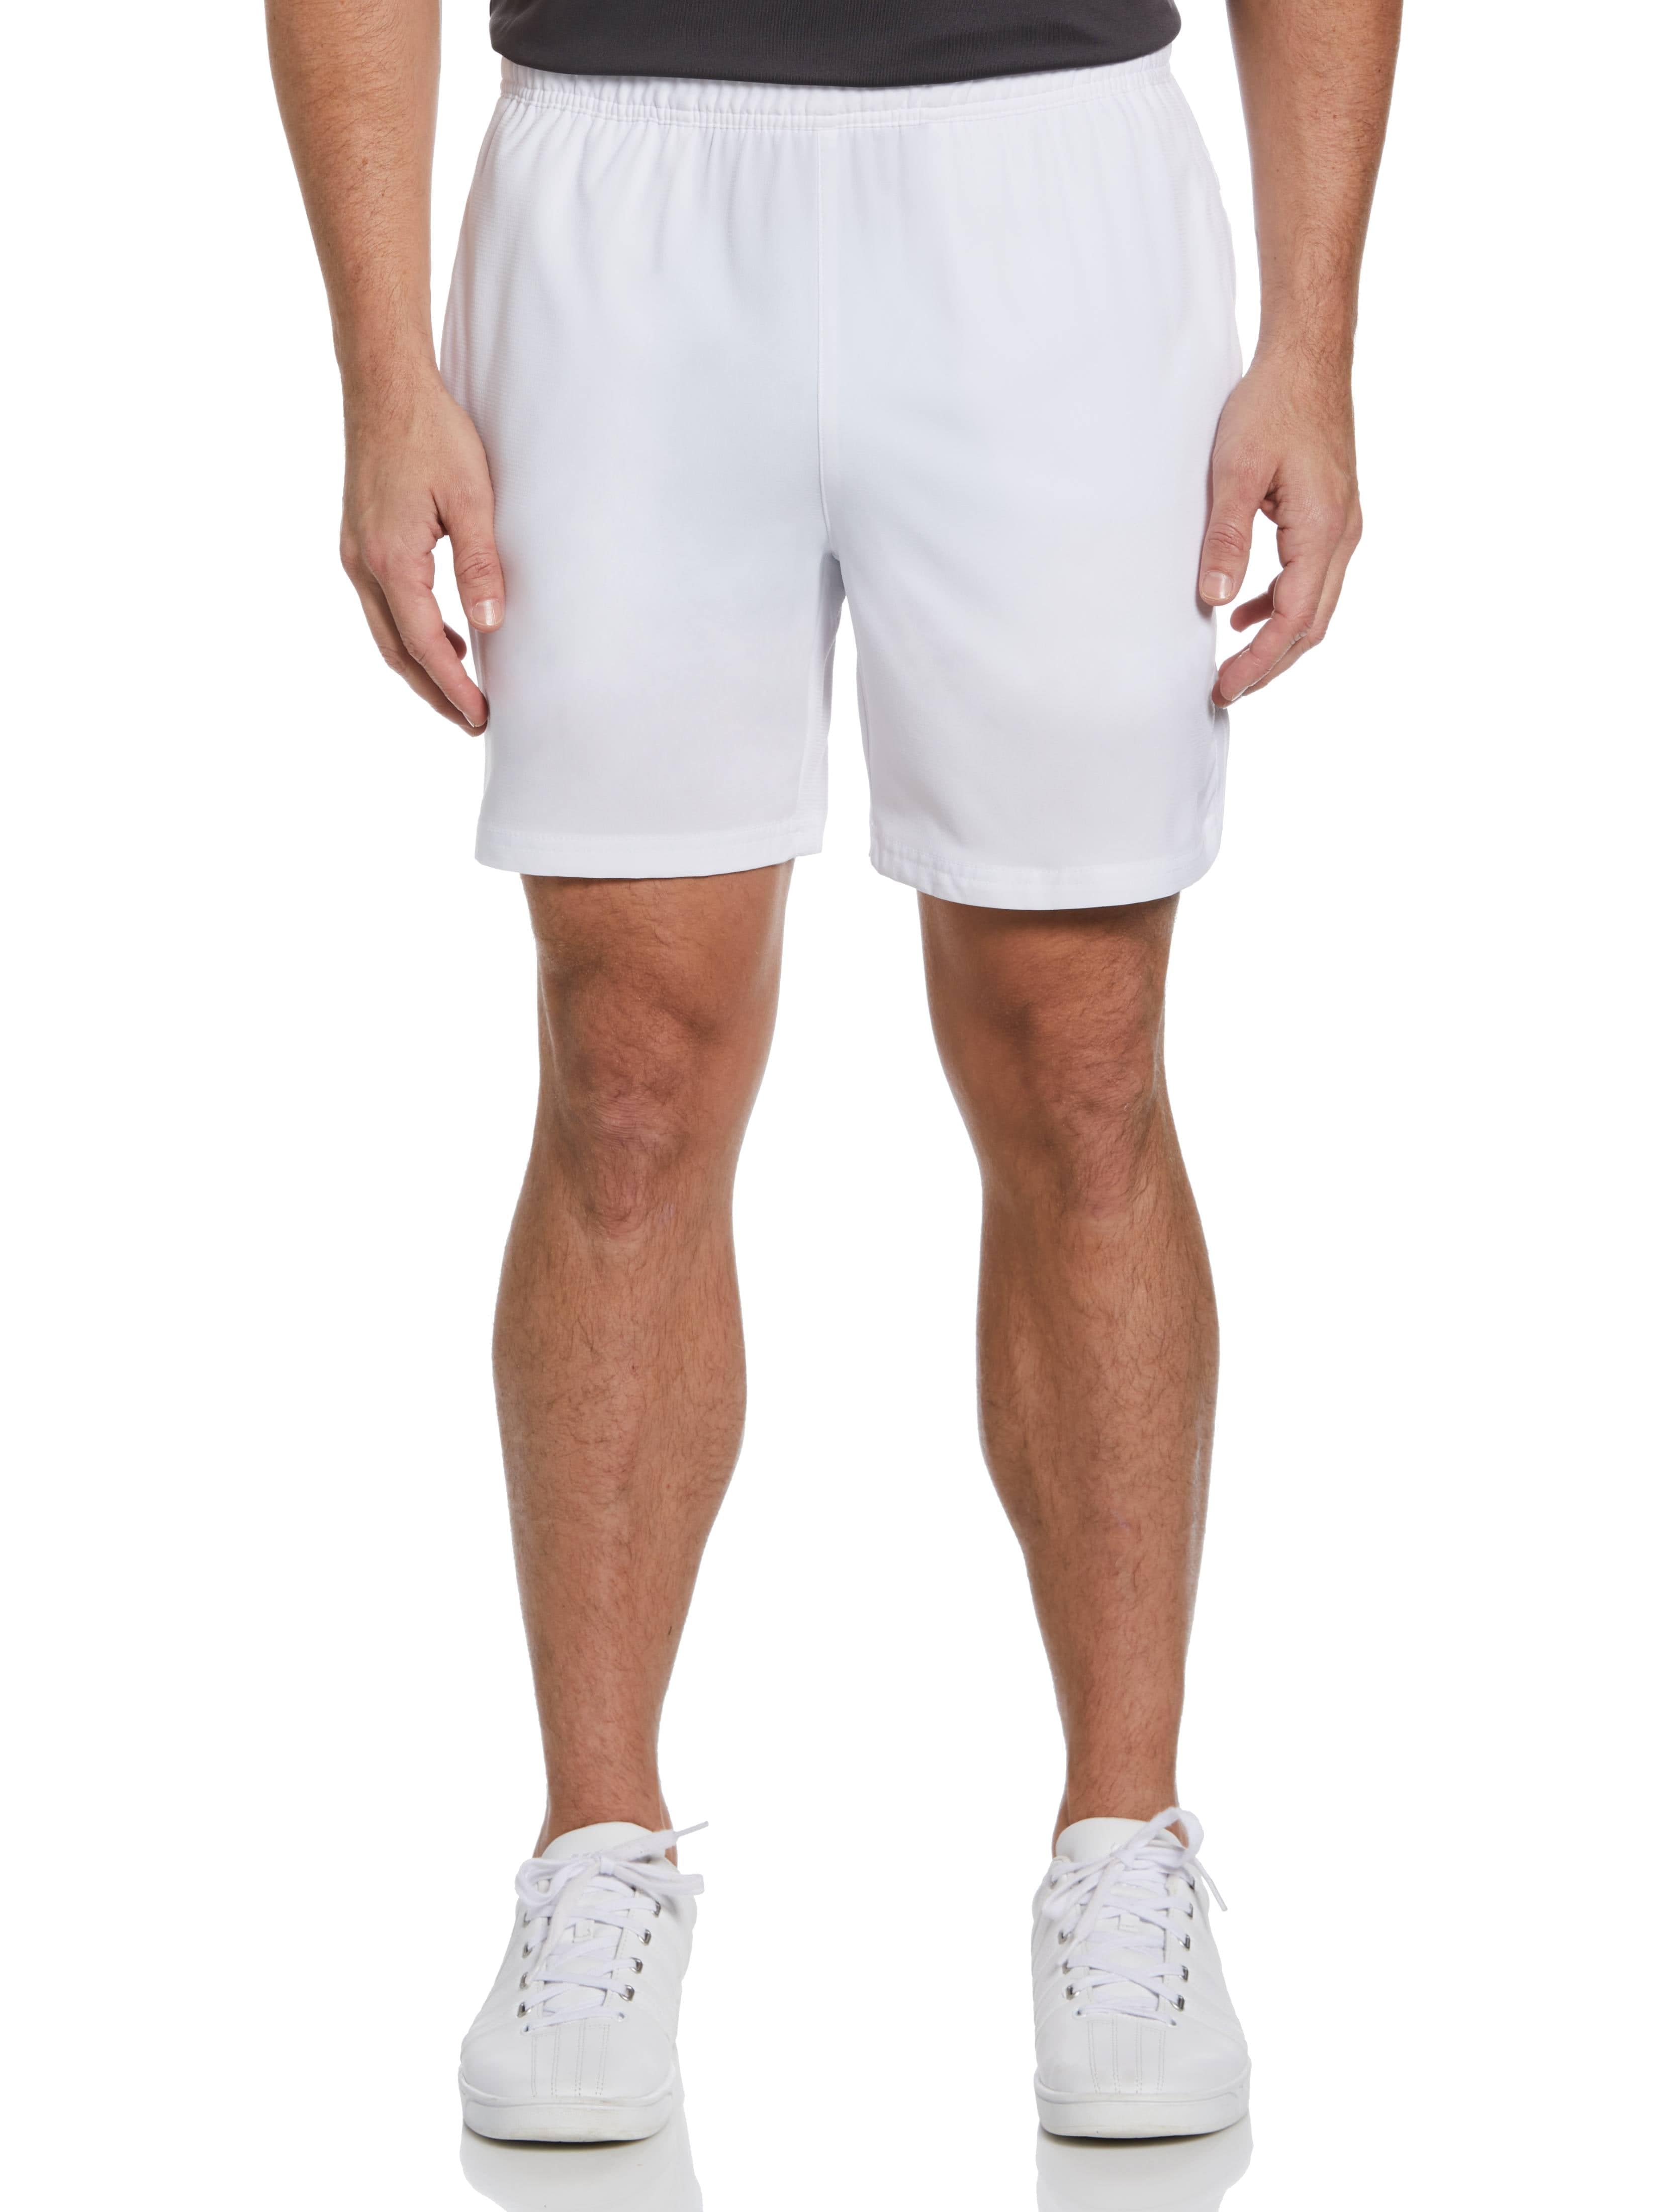 Grand Slam Mens Athletic Tennis Short, Size Medium, Bright White/Bright White, Polyester/Elastane | Golf Apparel Shop